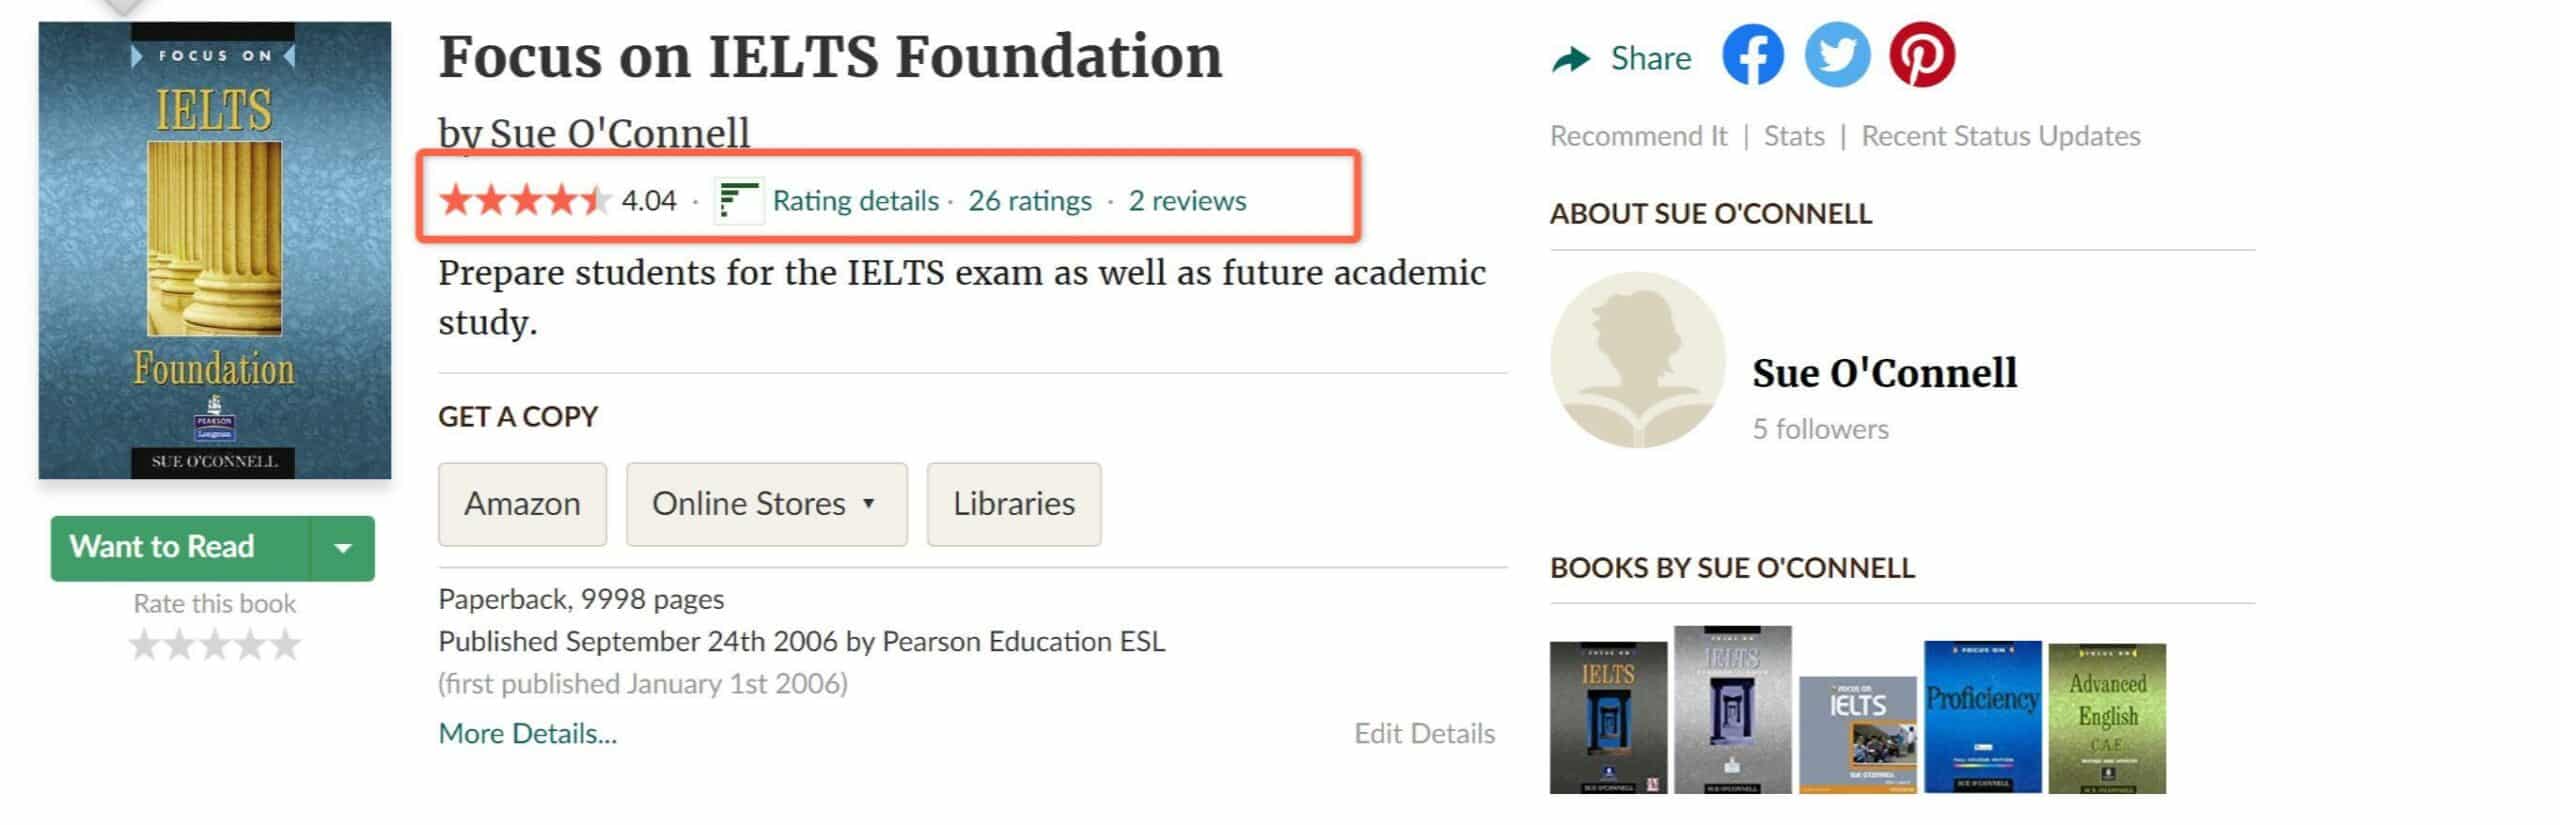 Focus on IELTS Foundation Goodreads 1